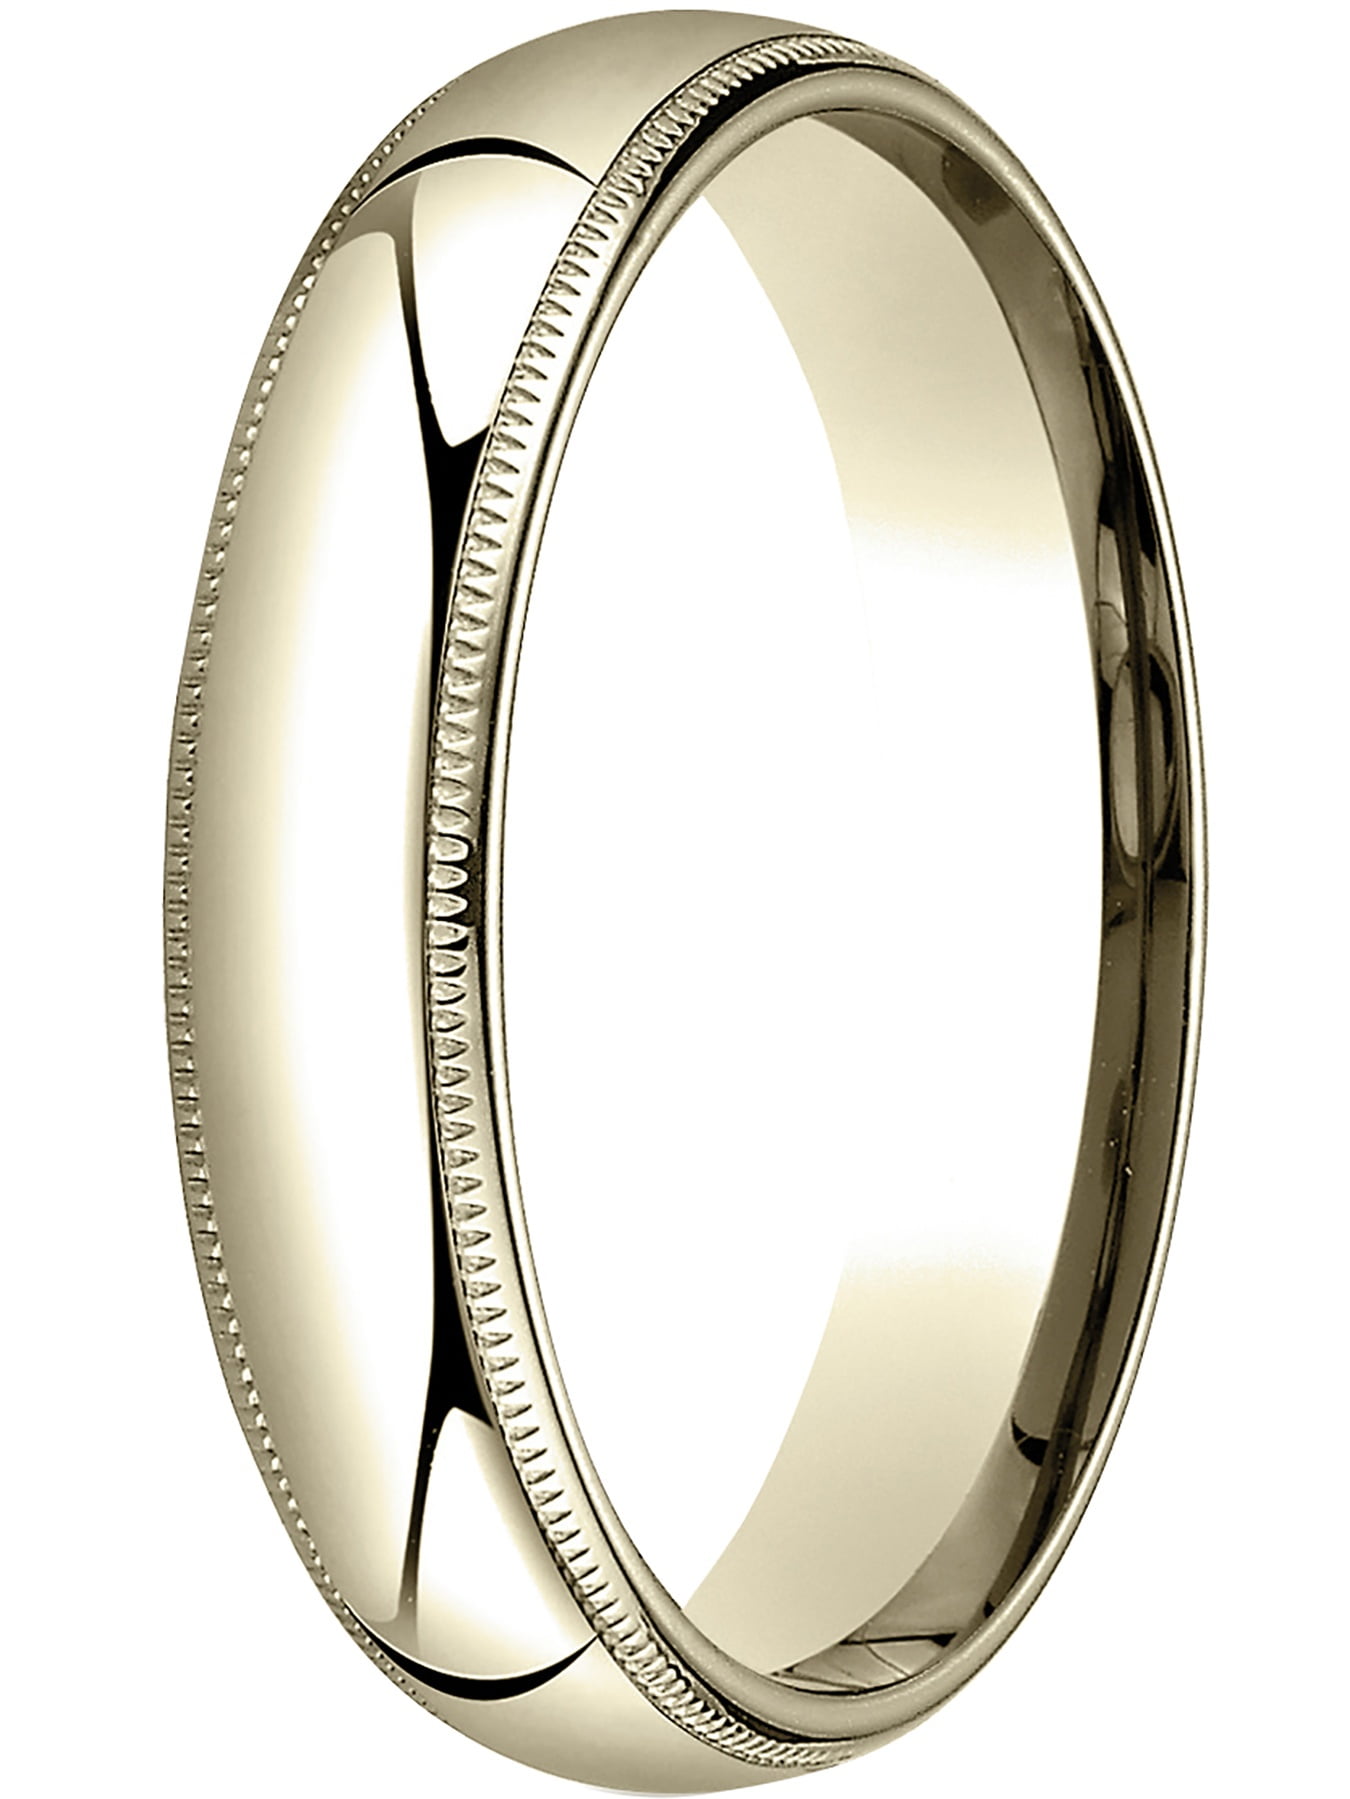 Benchmark 14K White Gold 2mm High Polished Rope Center Design Wedding Band Ring Sizes 4-15